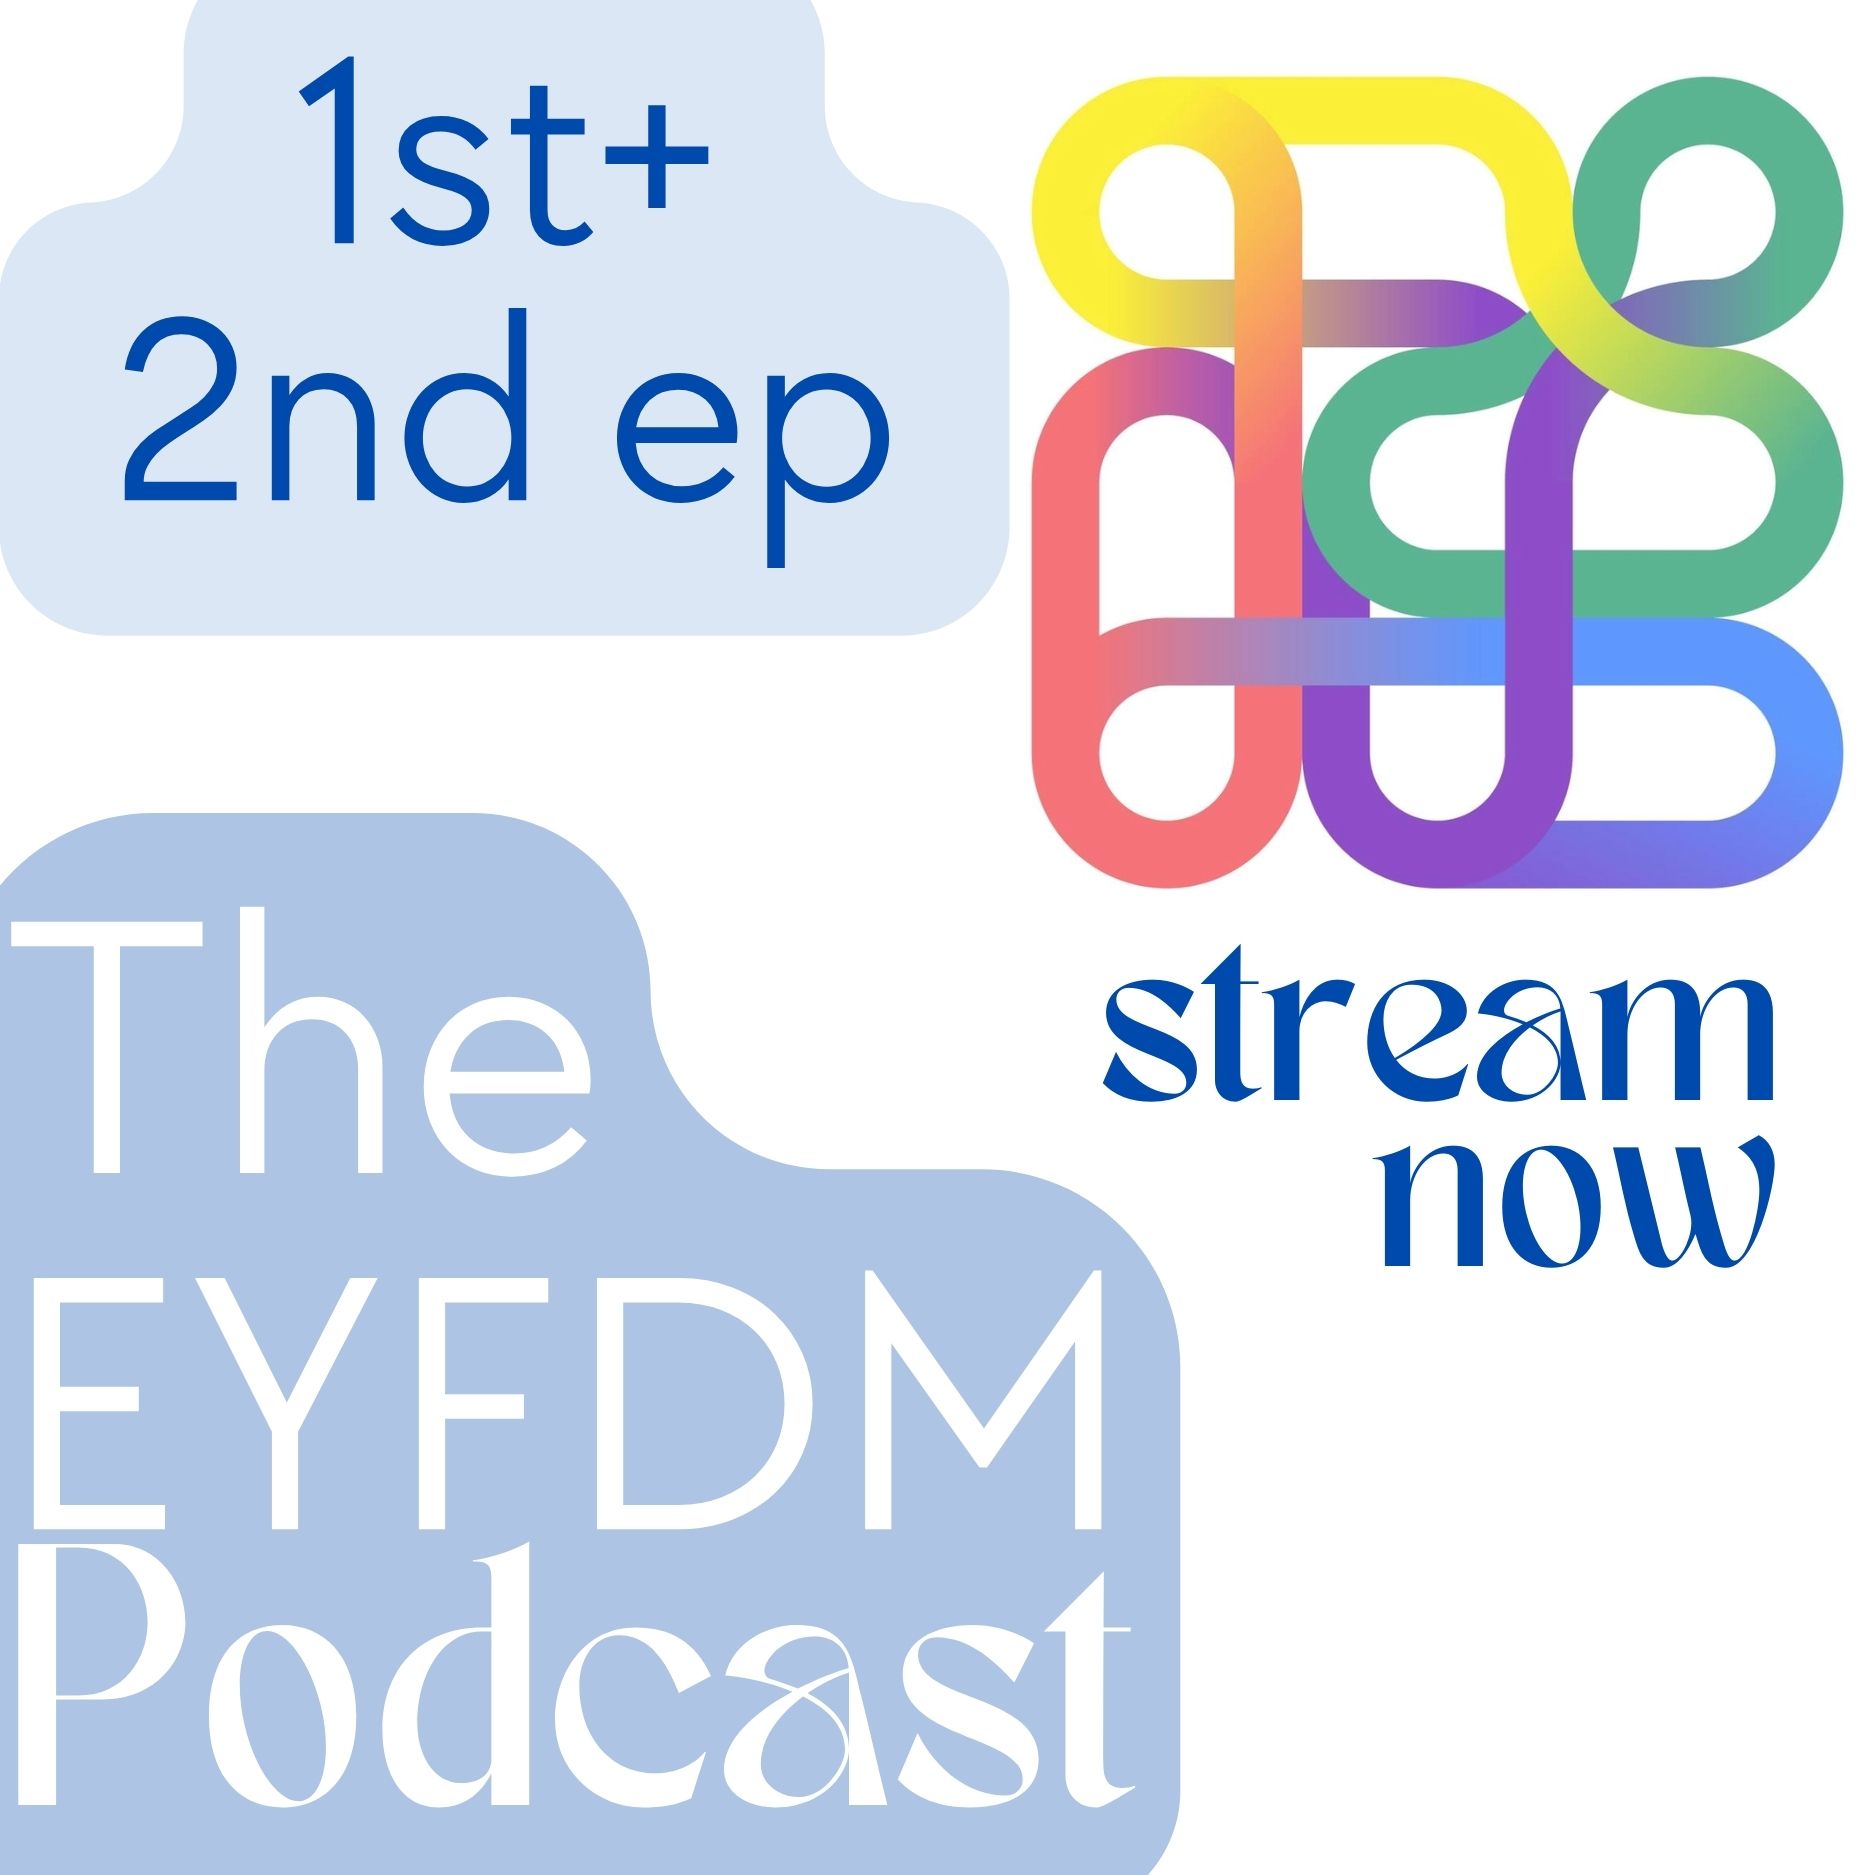 The EYFDM Podcast